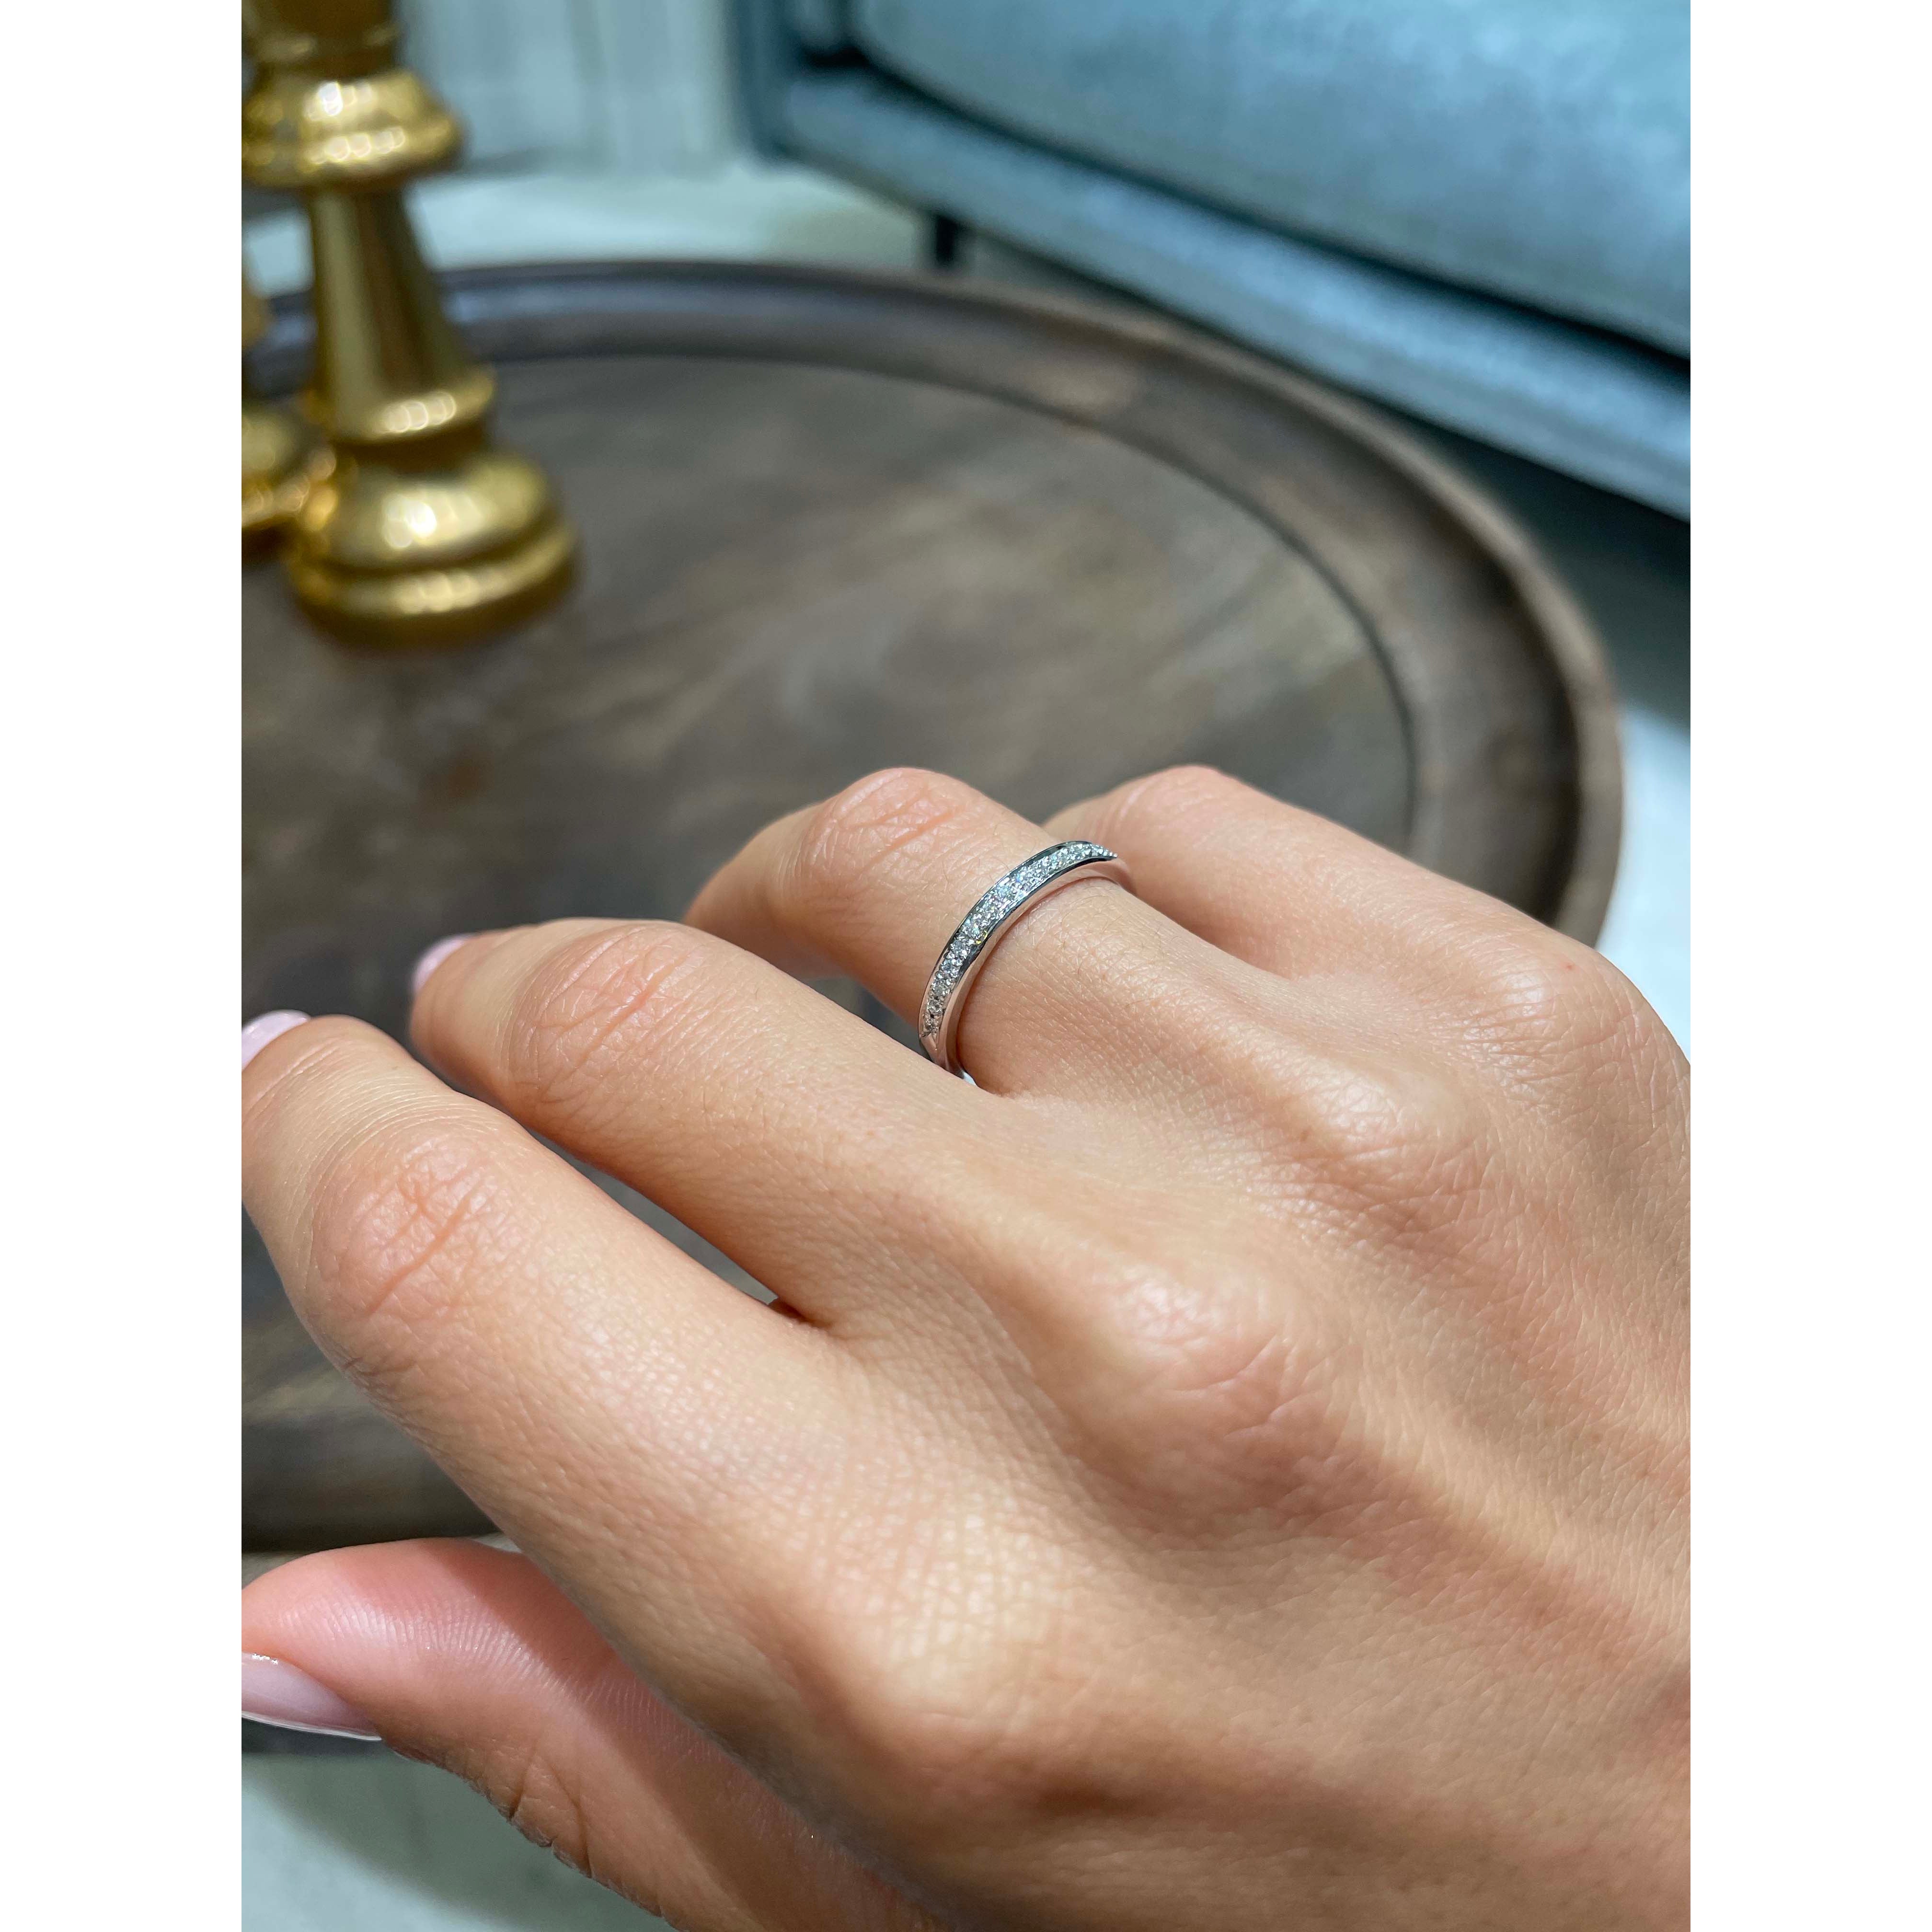 Giselle Diamond Wedding Ring   (0.2 Carat) -Platinum